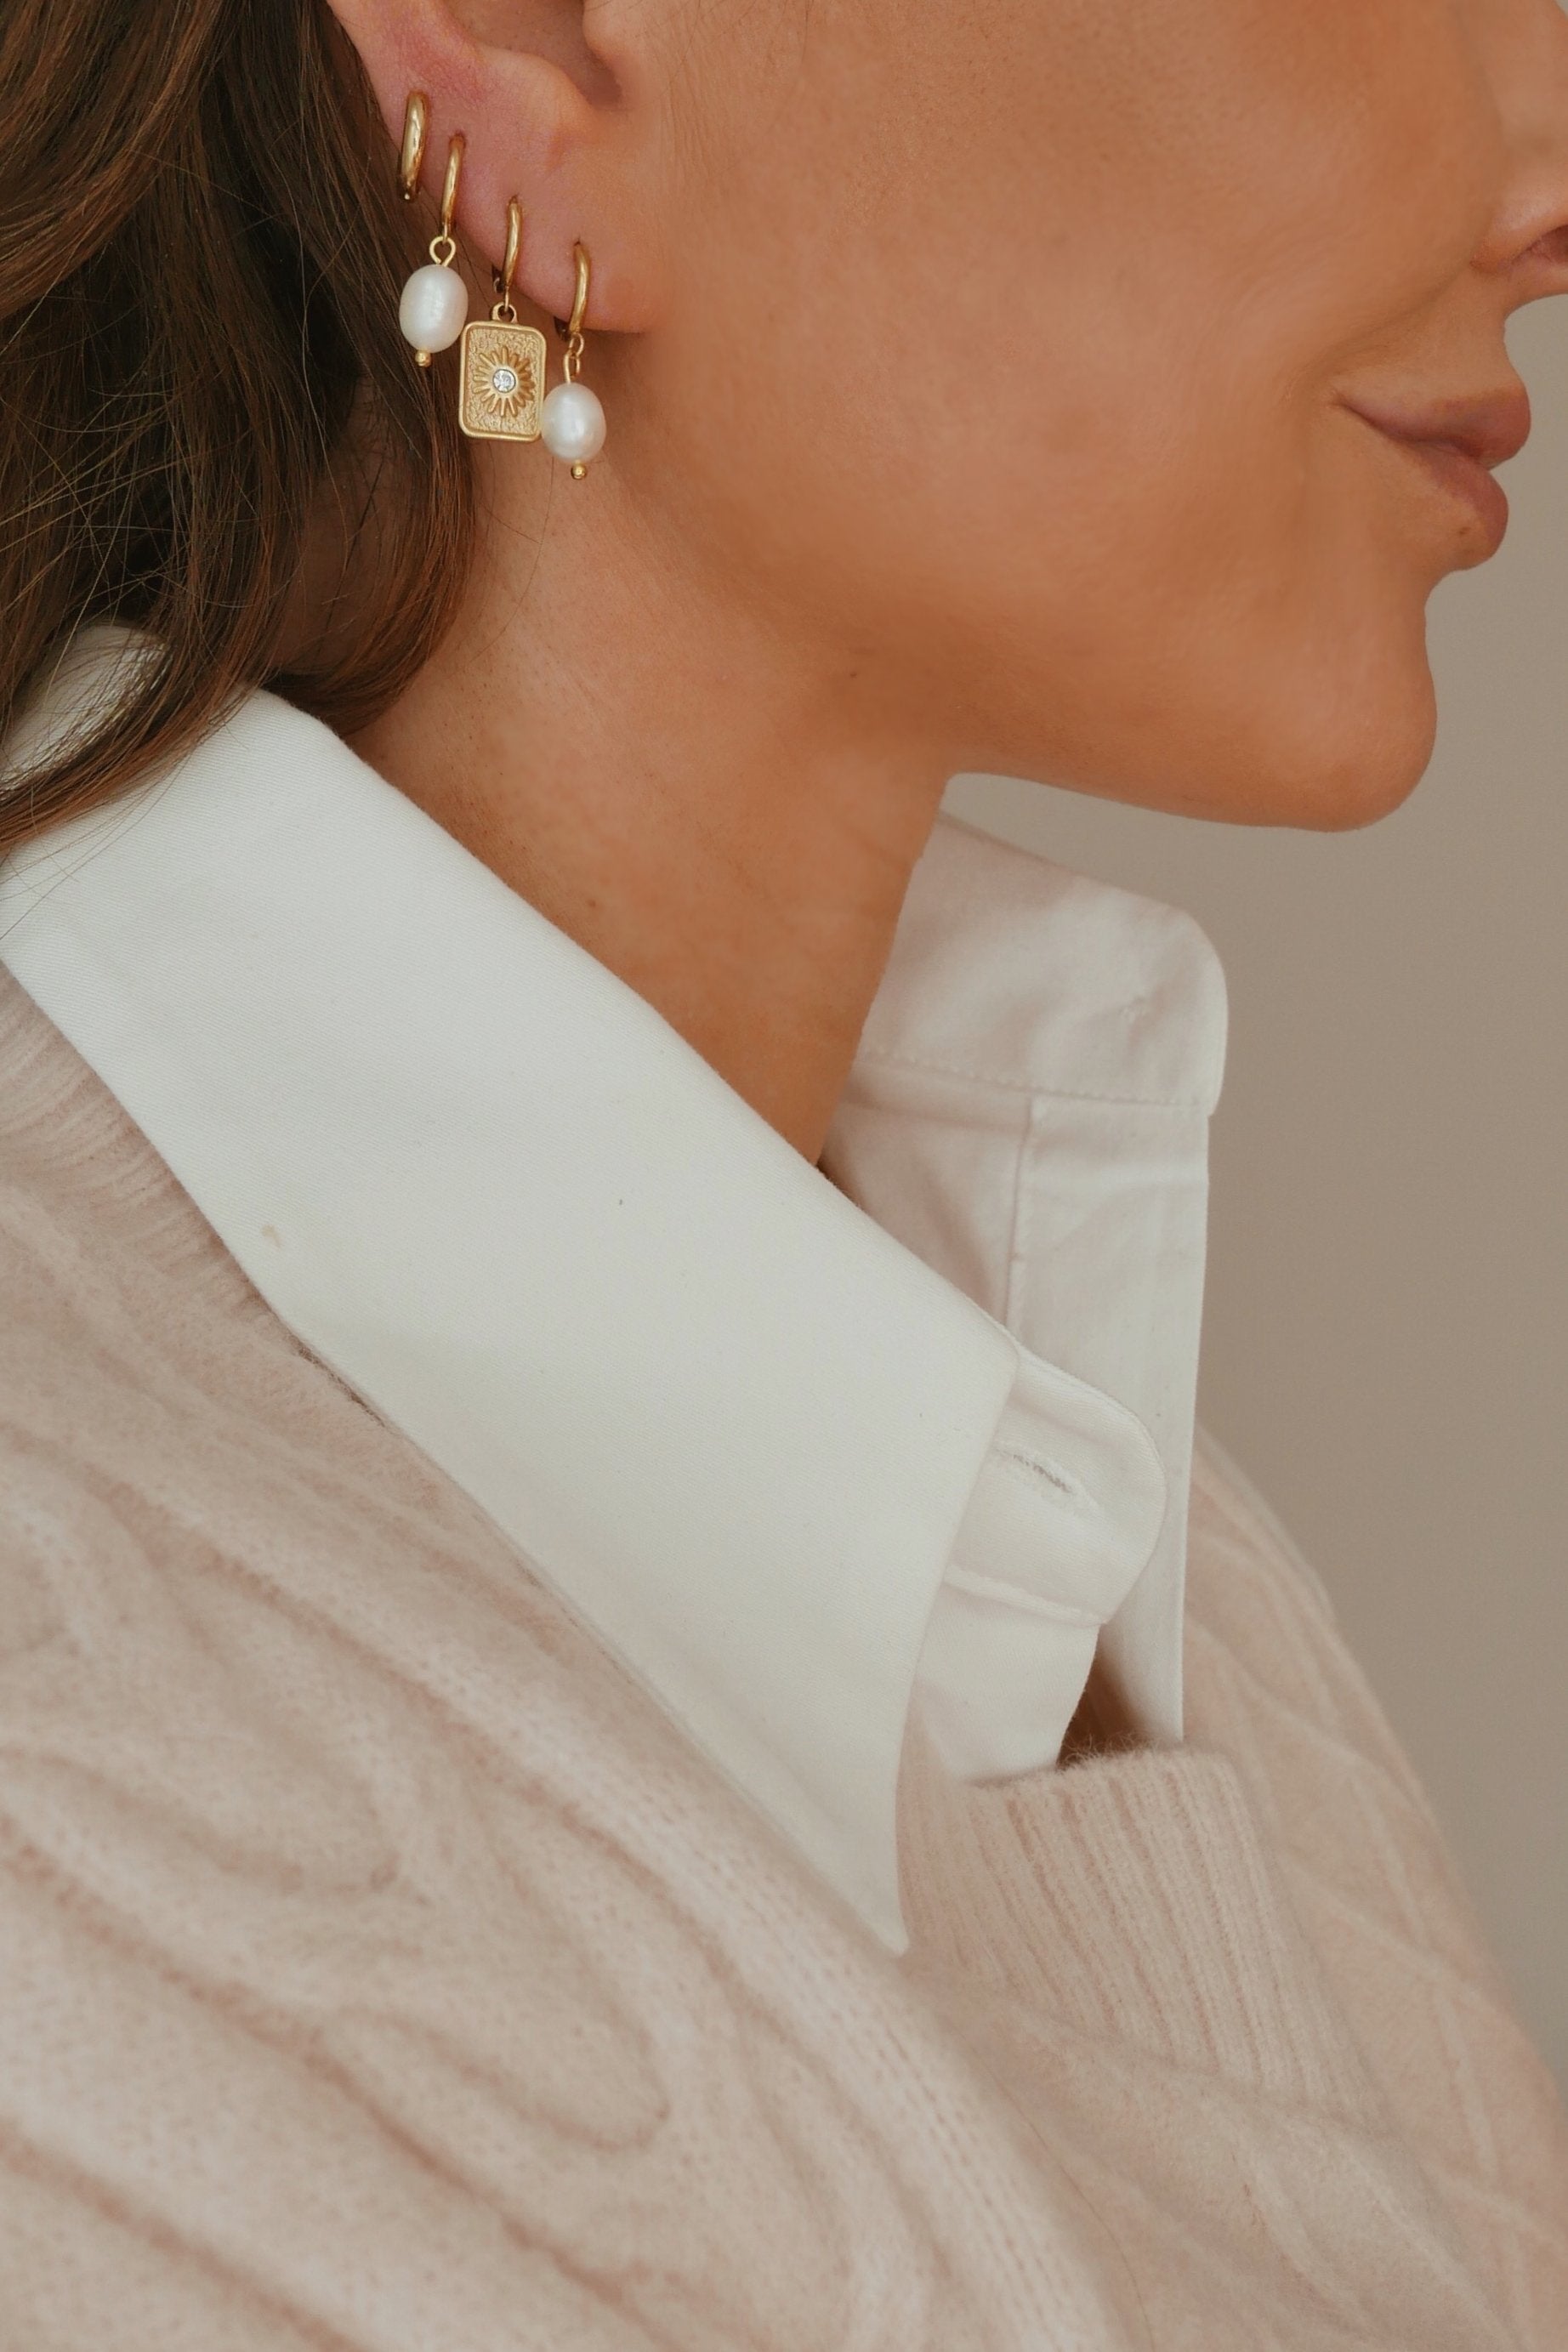 Aida Hoops - Boutique Minimaliste has waterproof, durable, elegant and vintage inspired jewelry